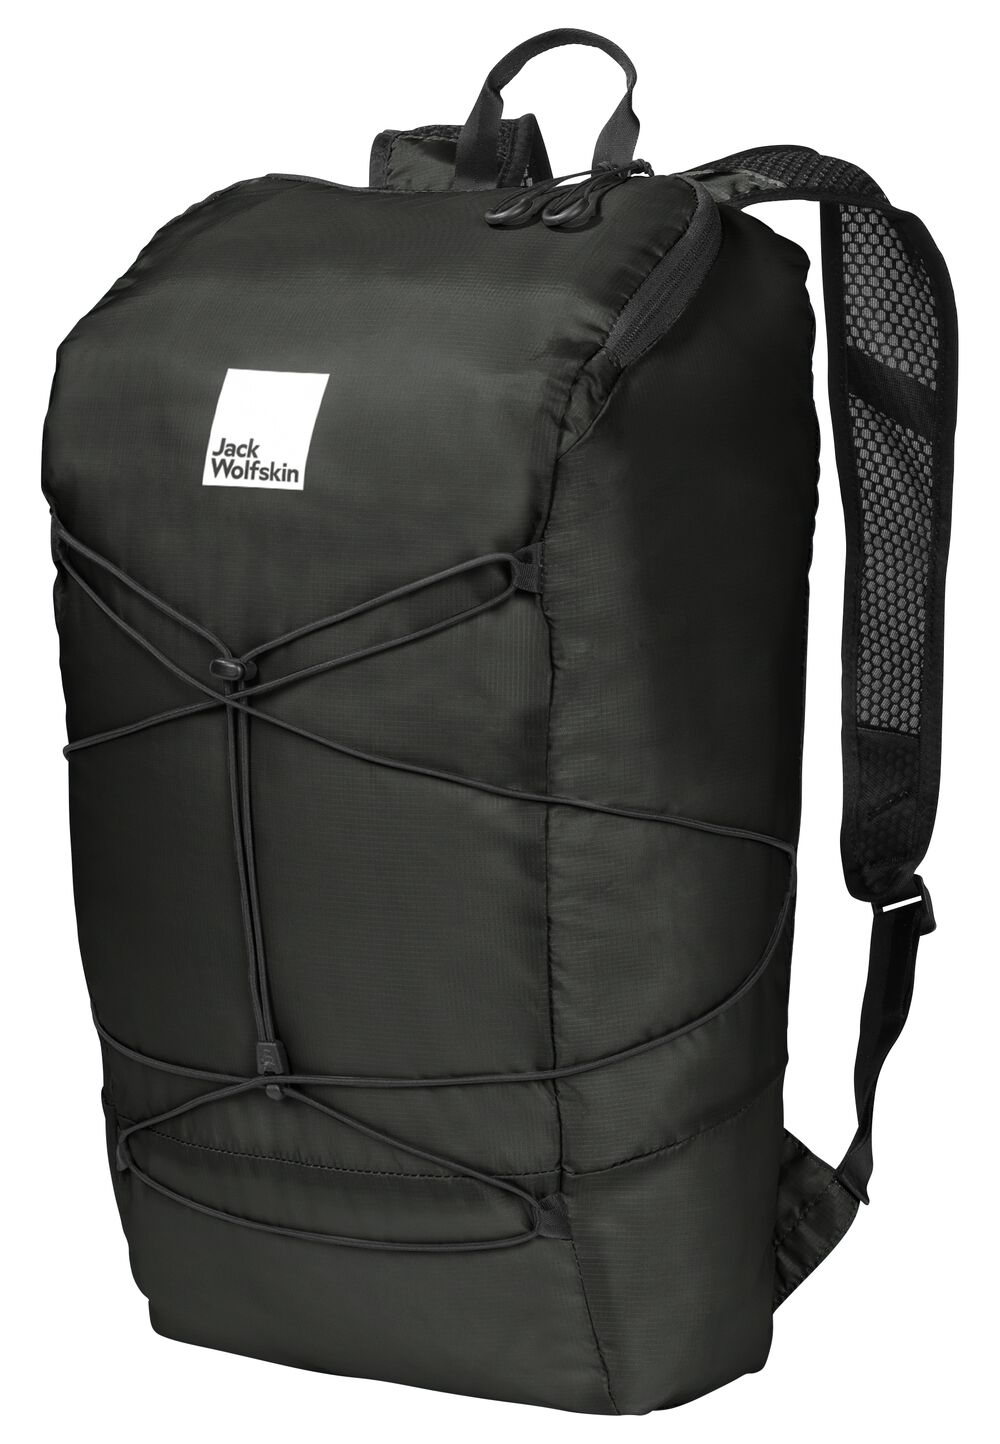 Photos - Backpack Jack Wolfskin Daypack Wandermood Packable 24 one size black granite black 